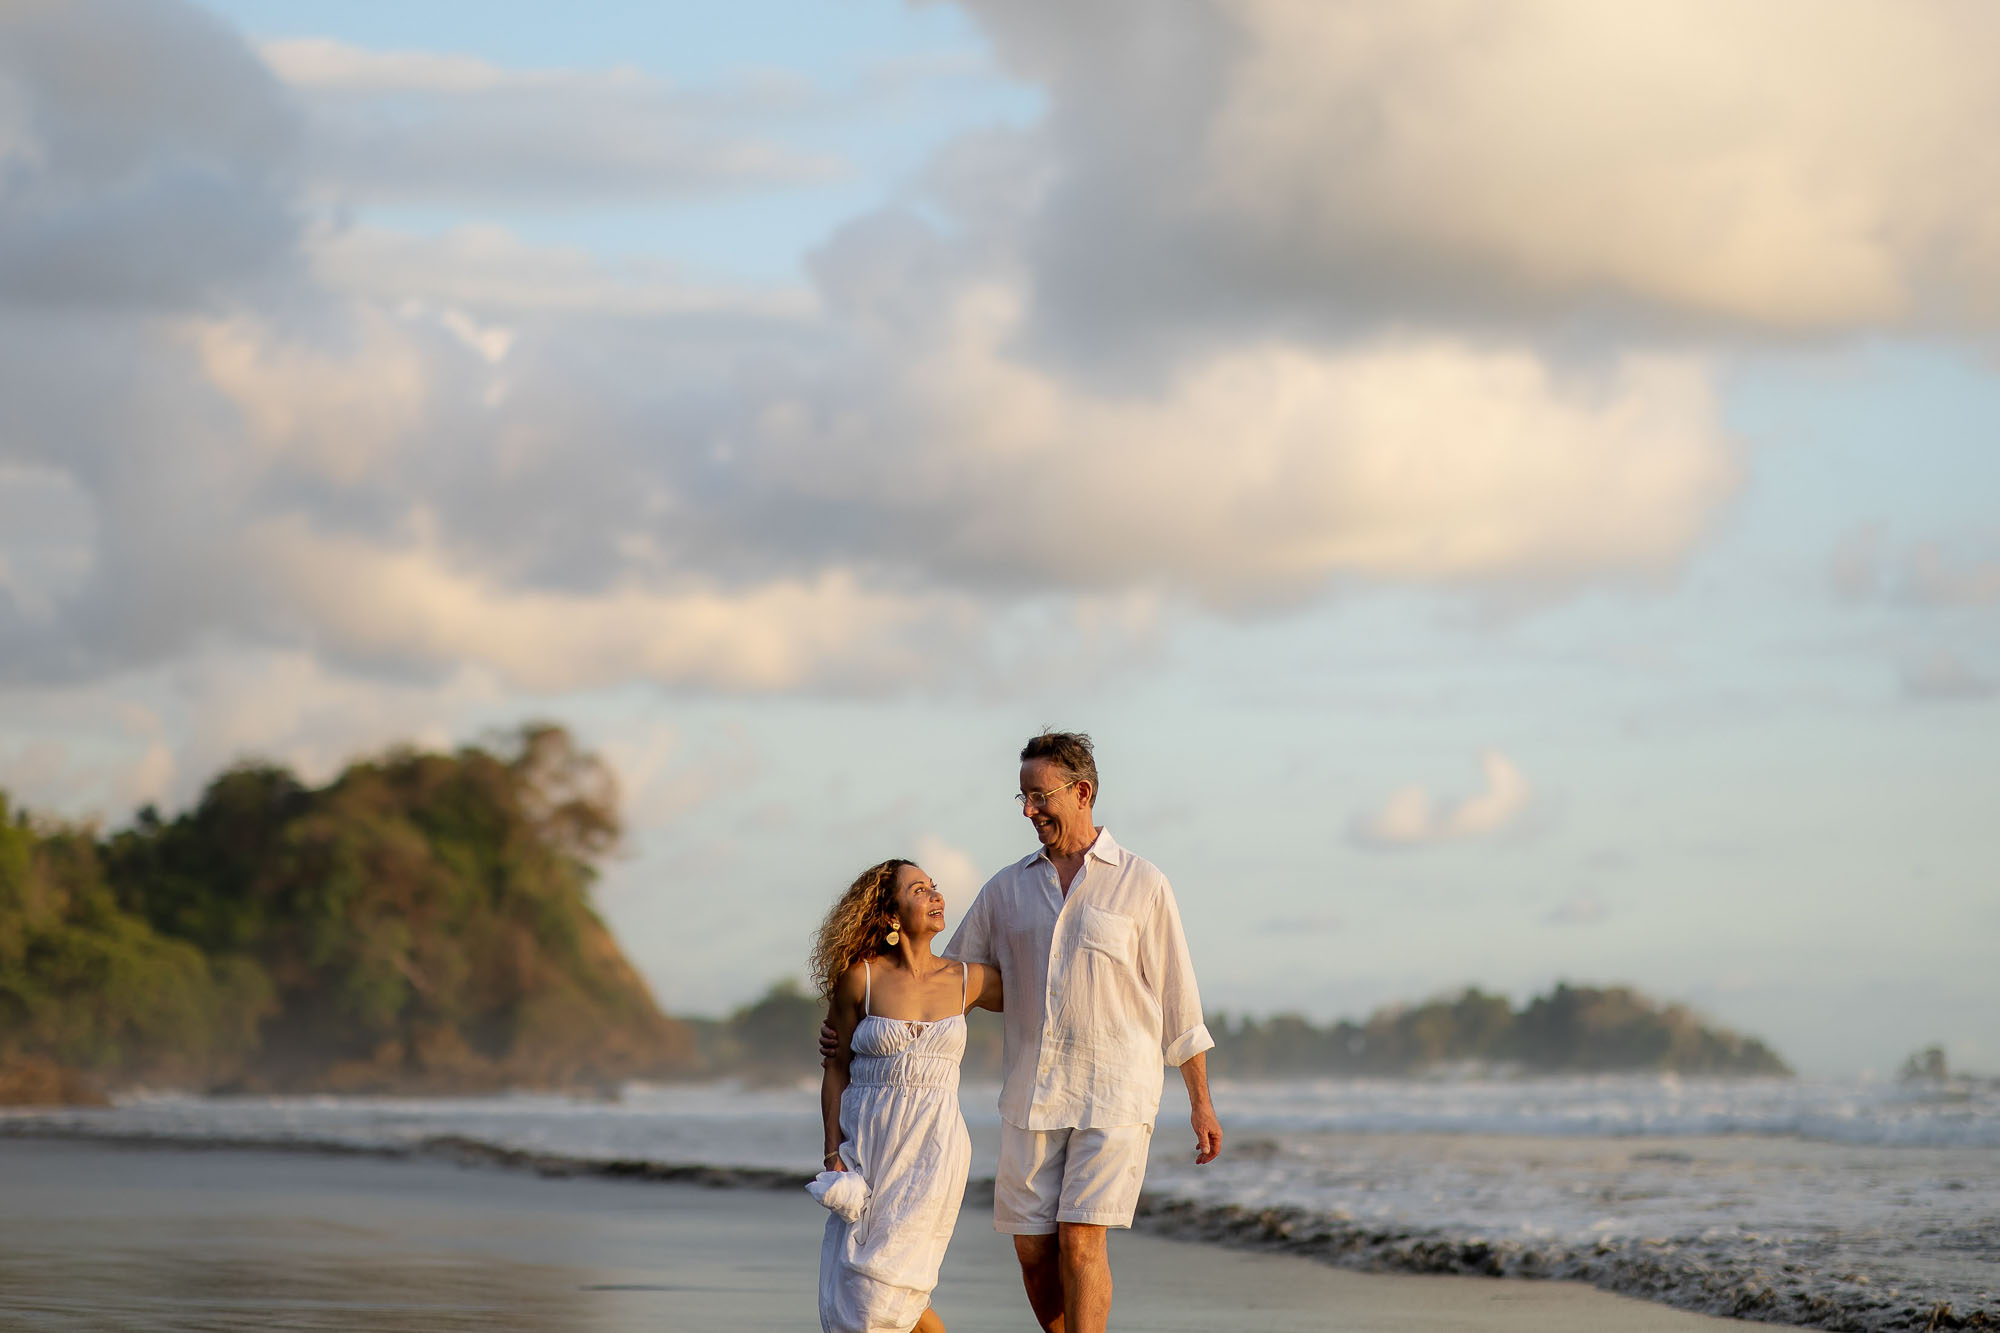 The happy couple walks along Roca Verde Beach in Dominical